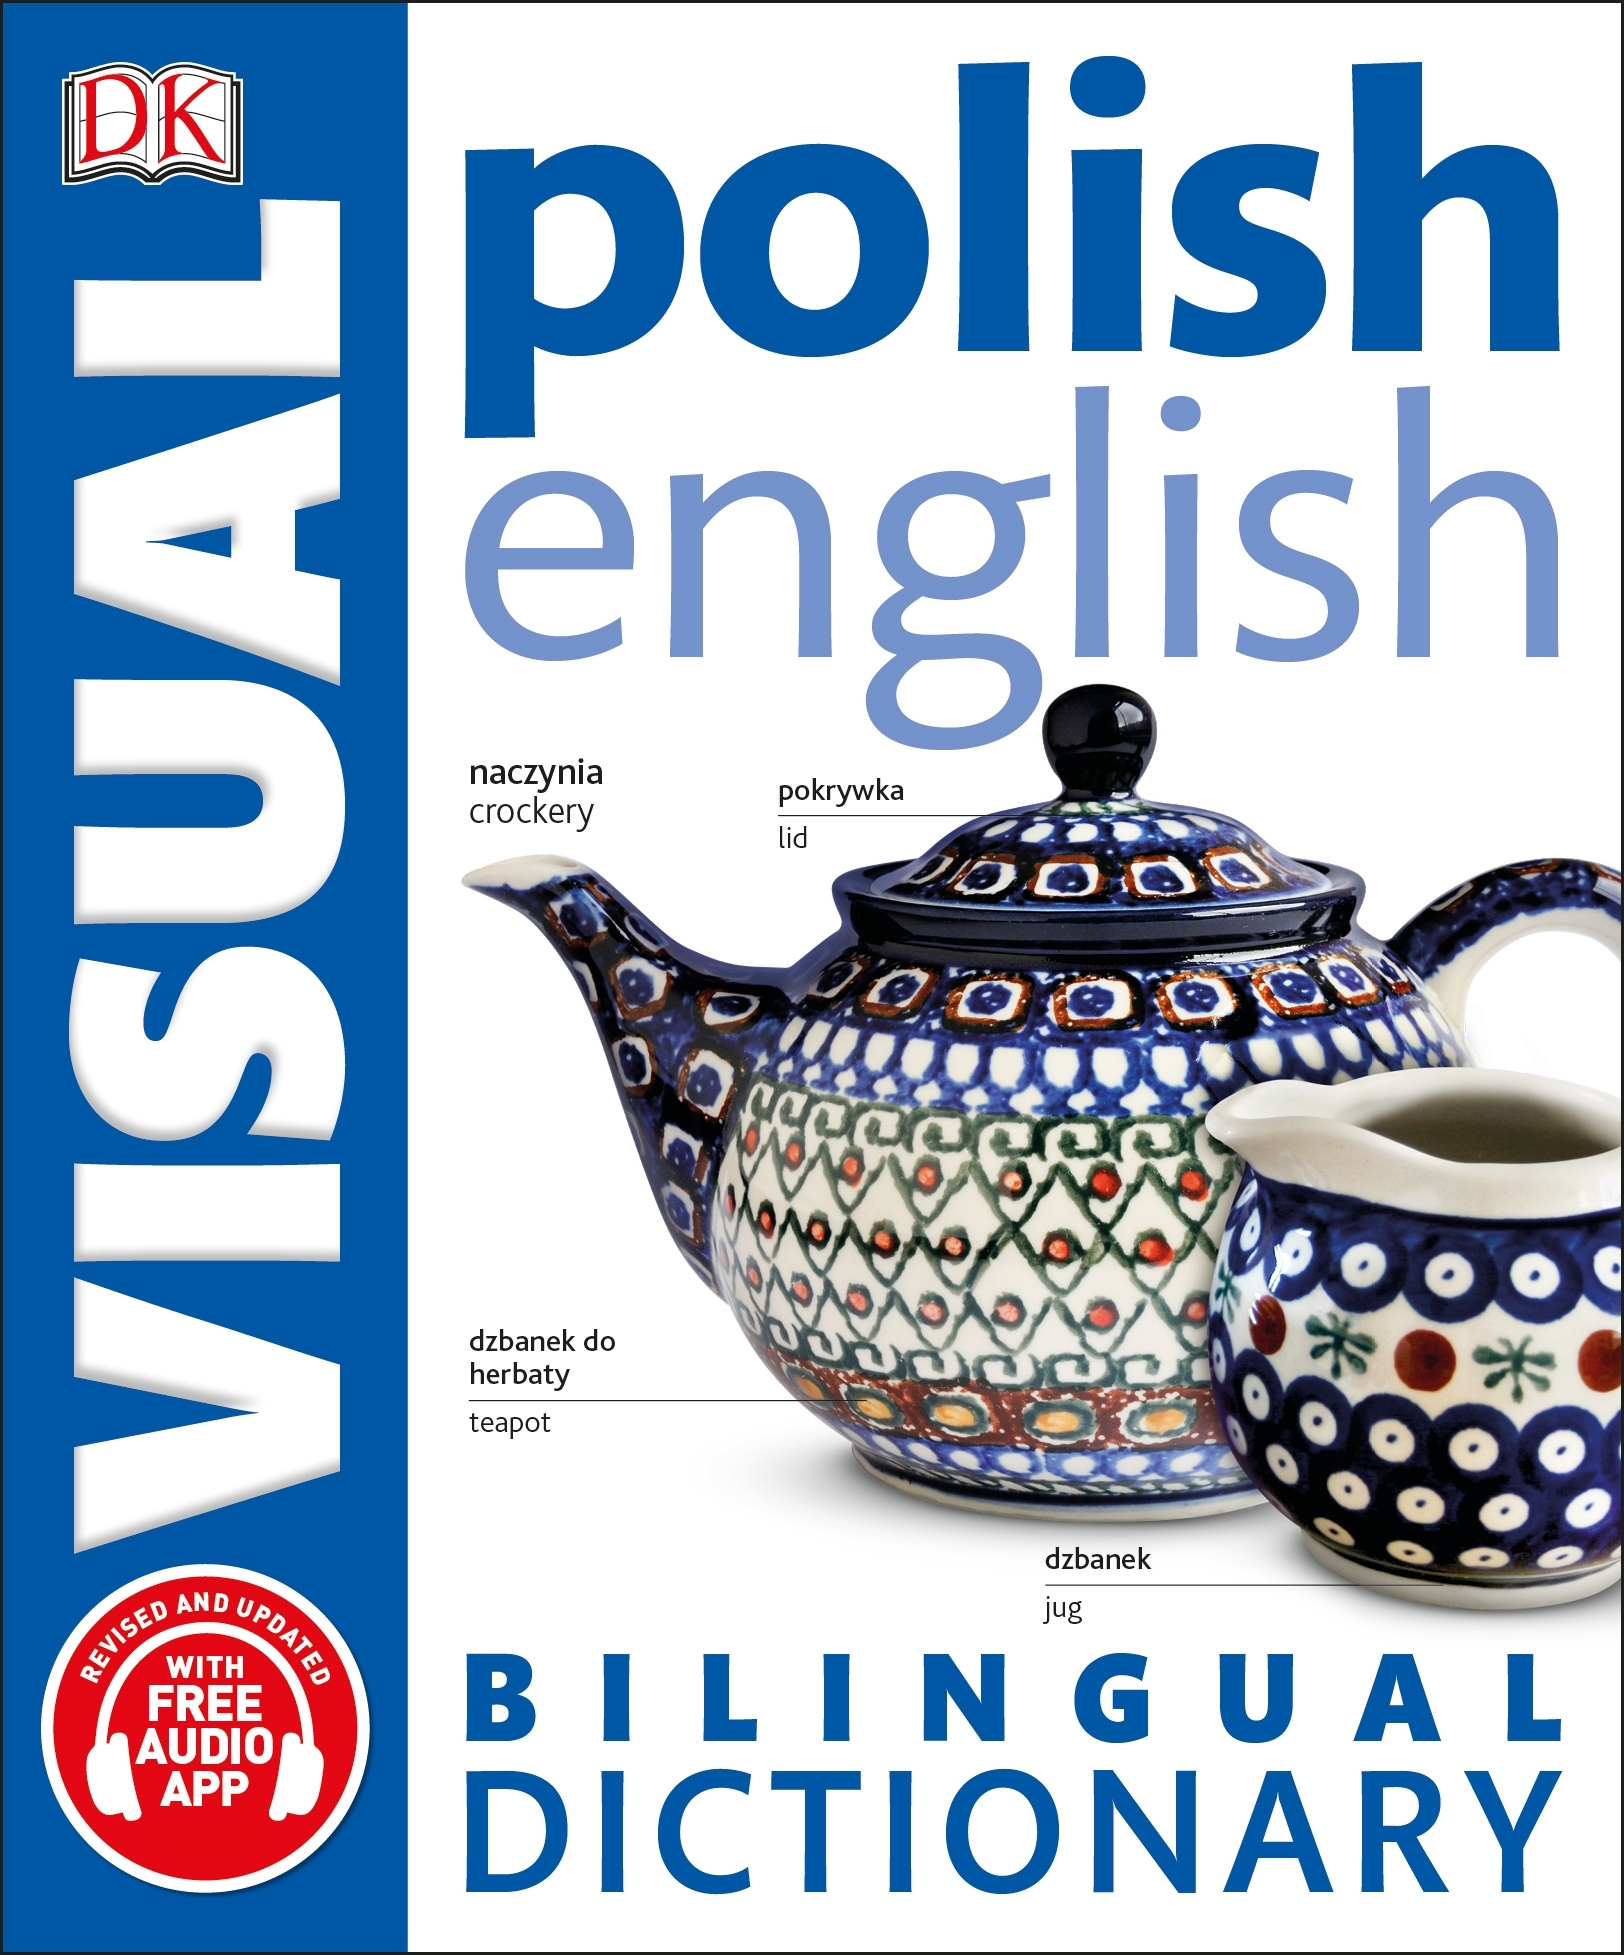 bilingual law dictionary